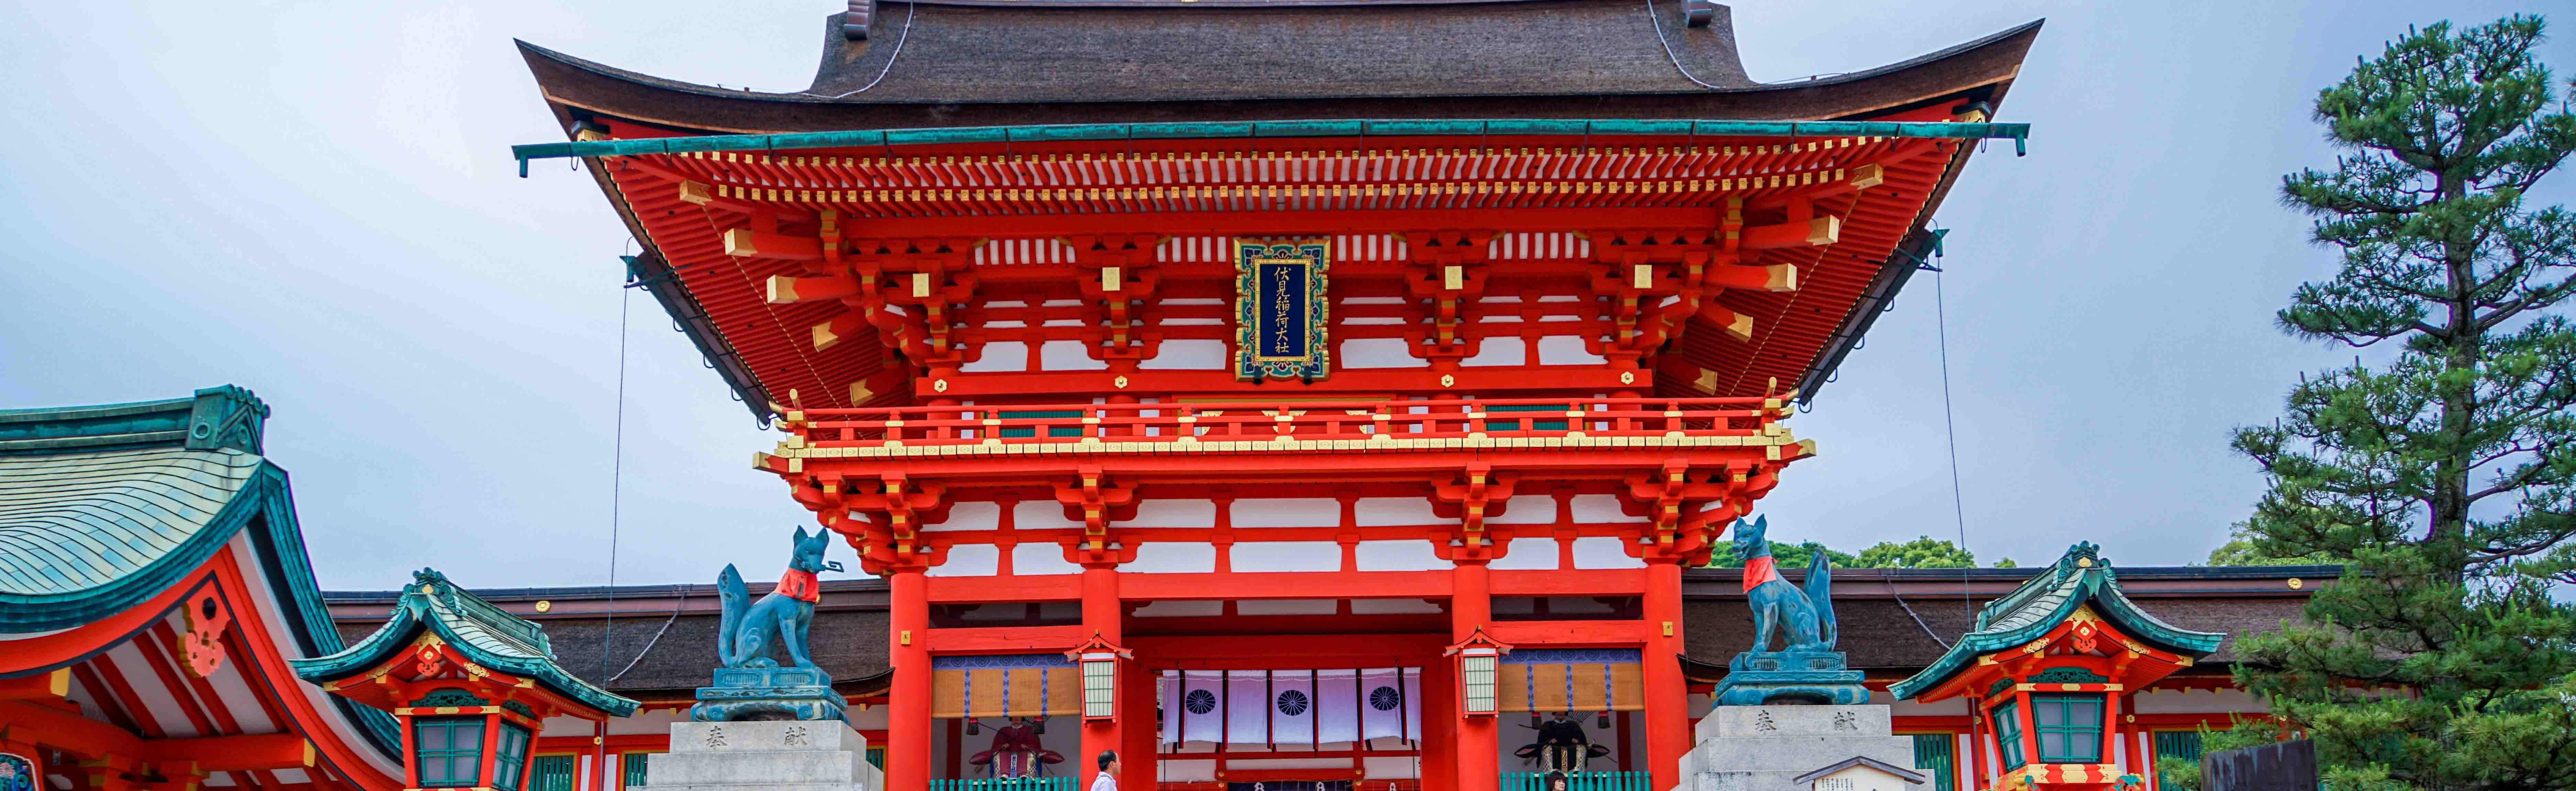 japan temple event